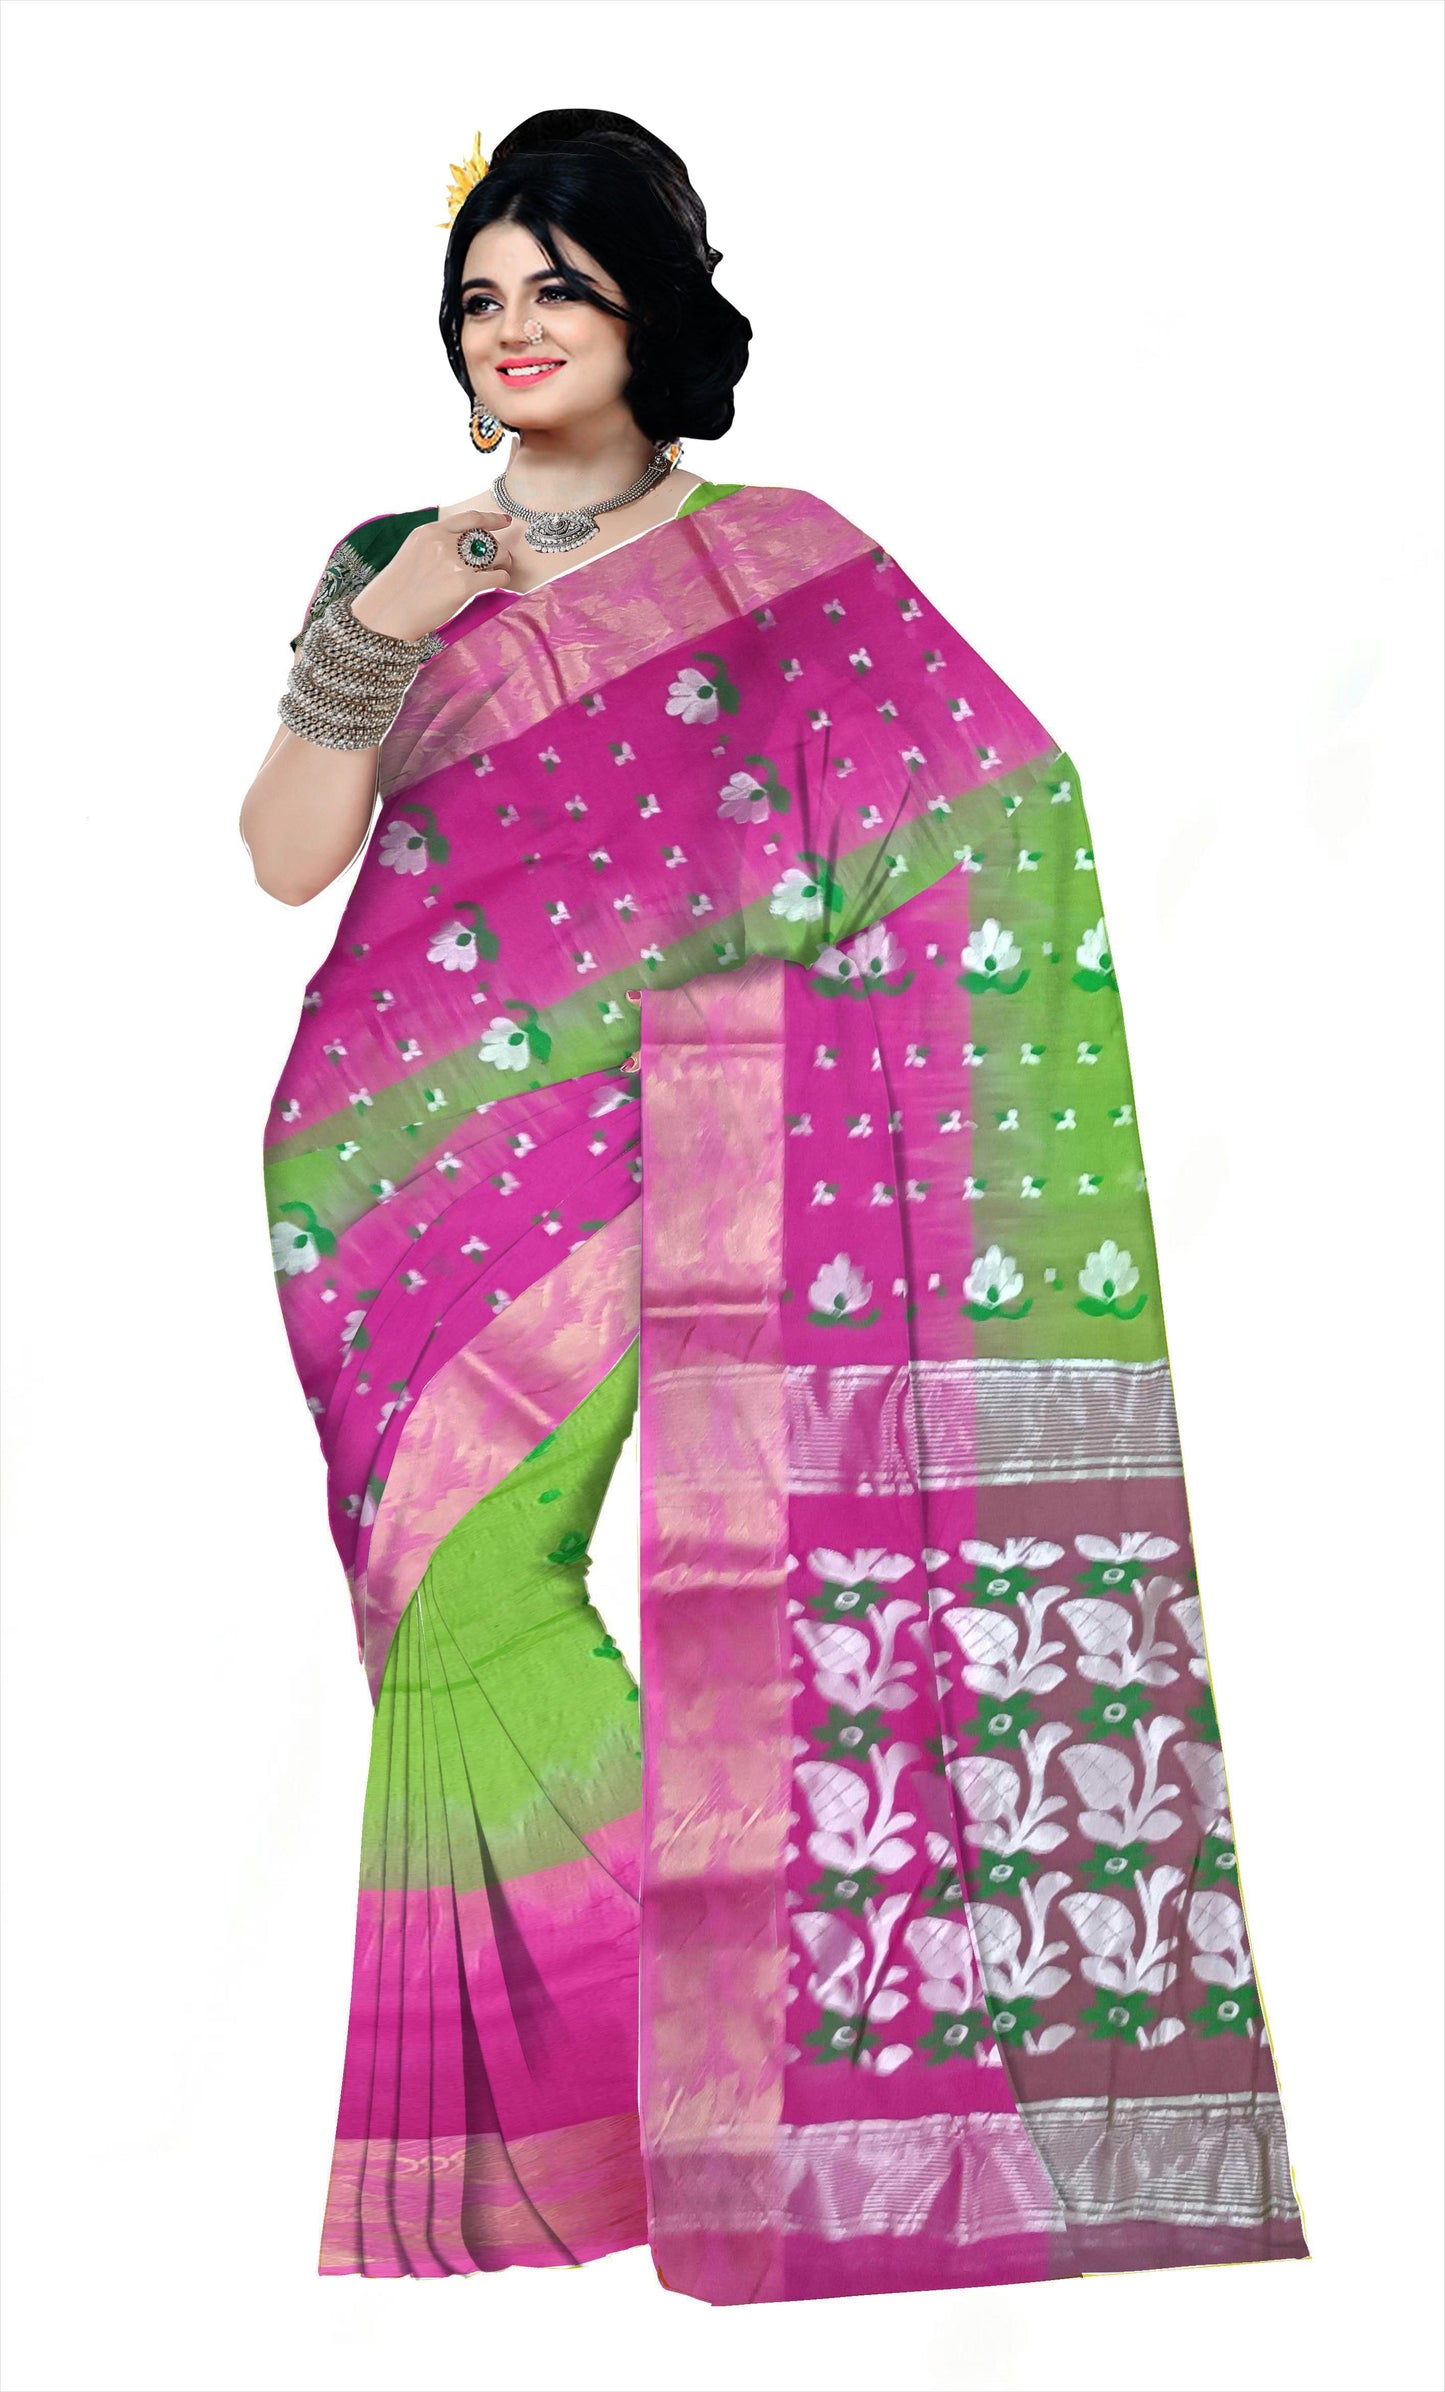 Pradip Fabrics Ethnic Women's Cotton Tant cotton Green & pink Color Saree